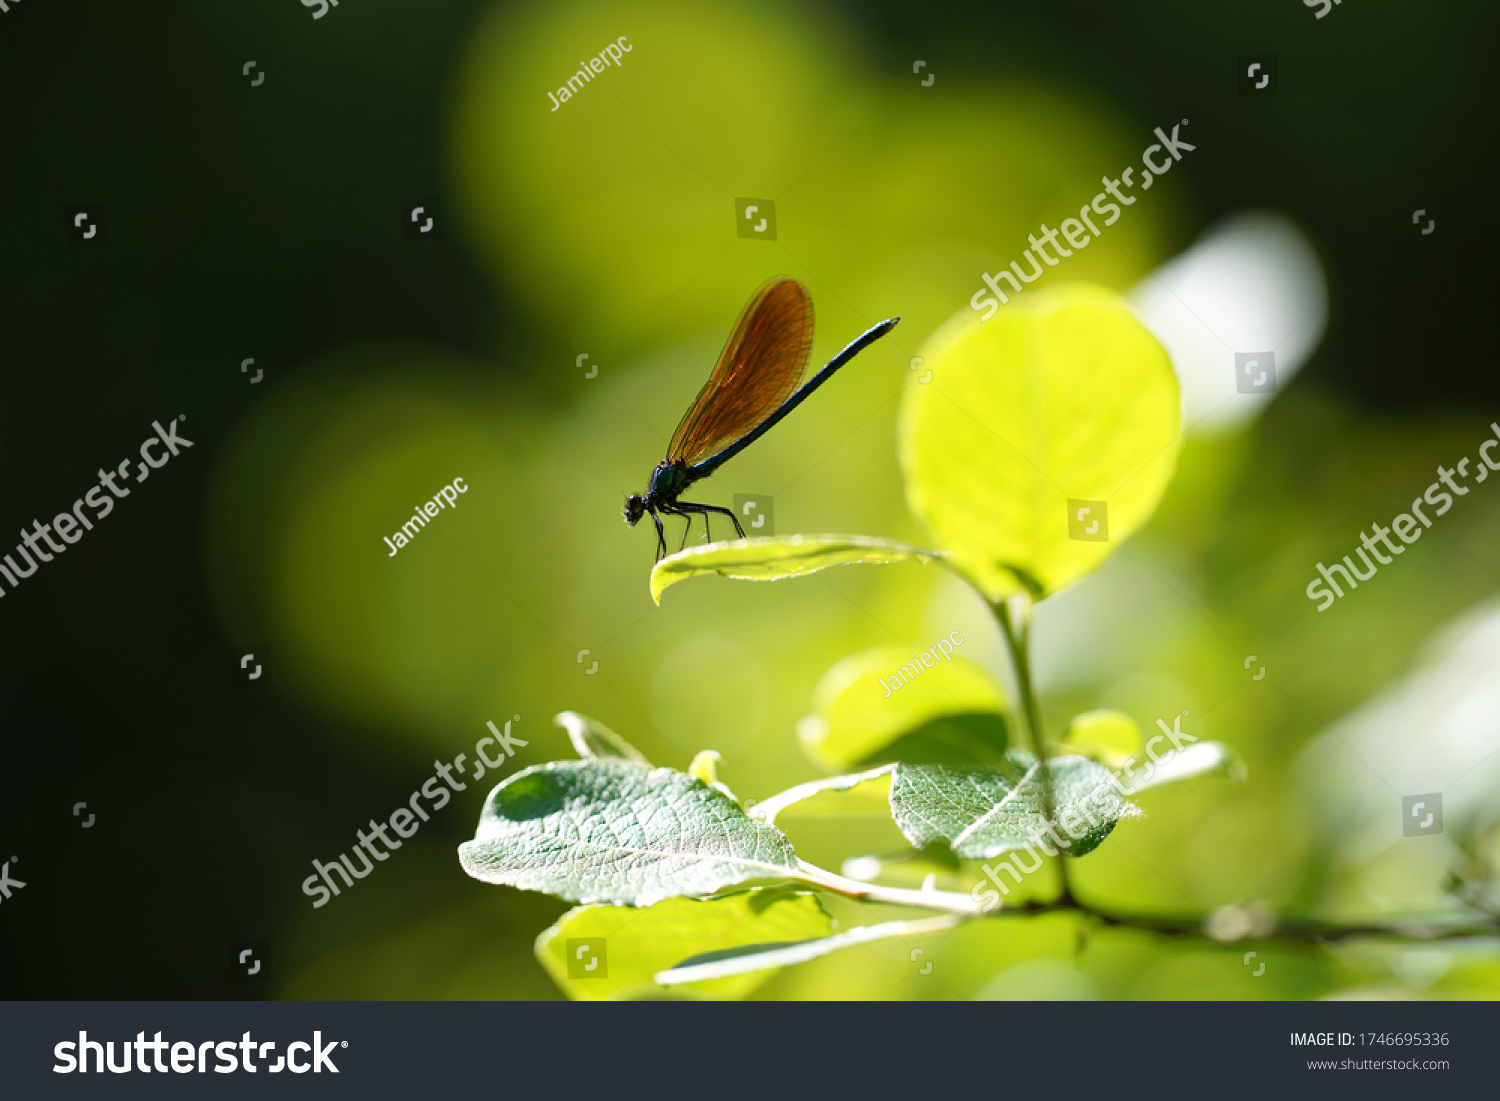 A beautiful damoiselle resting on a leaf        #1746695336